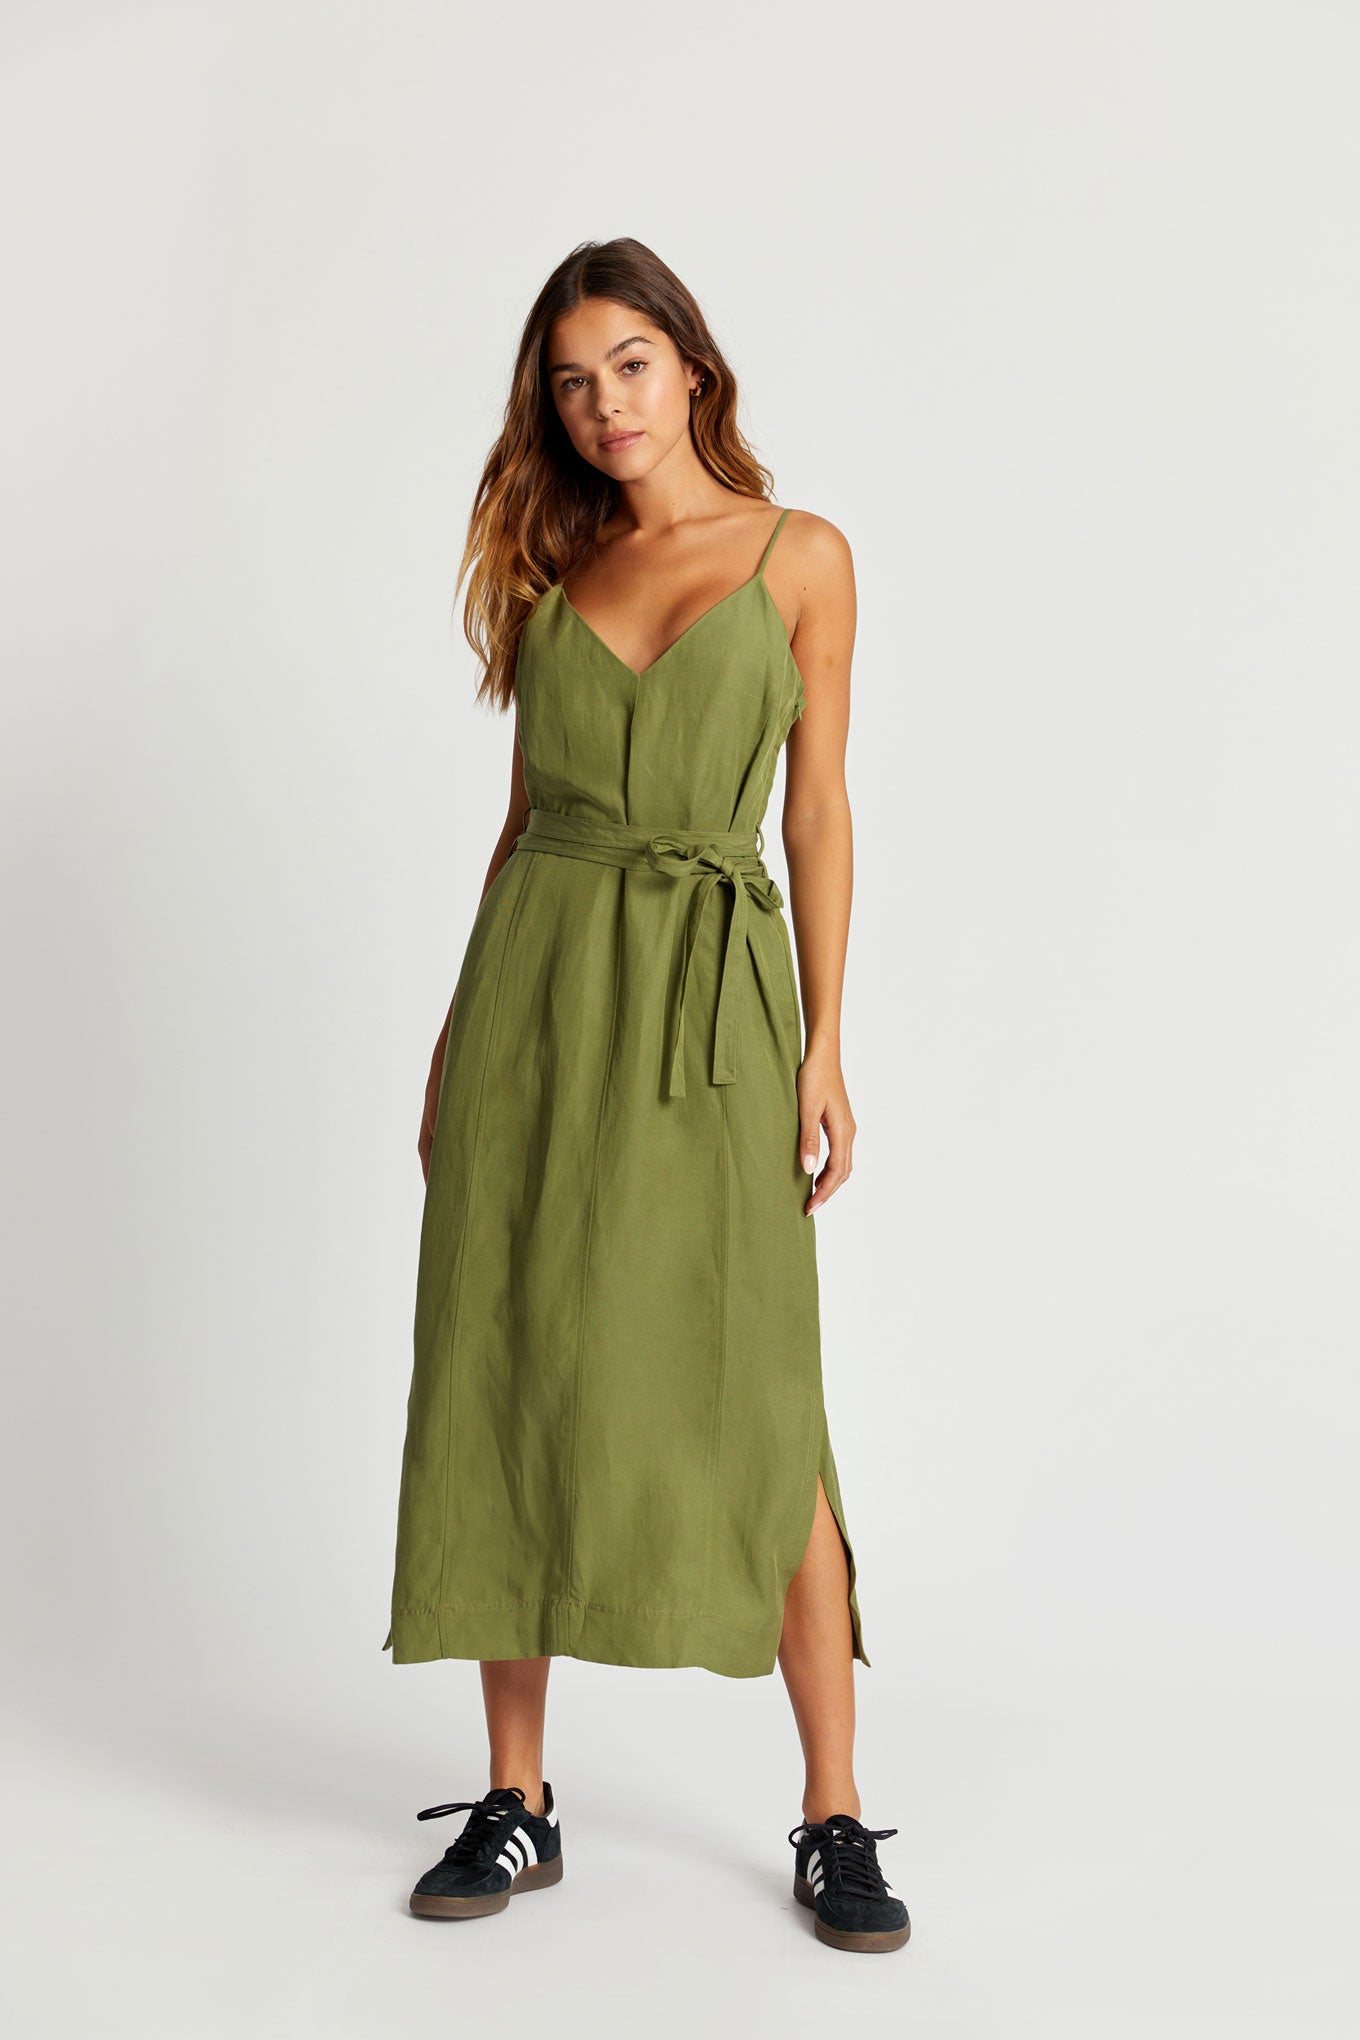 IMAN Tencel Linen Slip Dress - Khaki Green, SIZE 2 / UK 10 / EUR 38